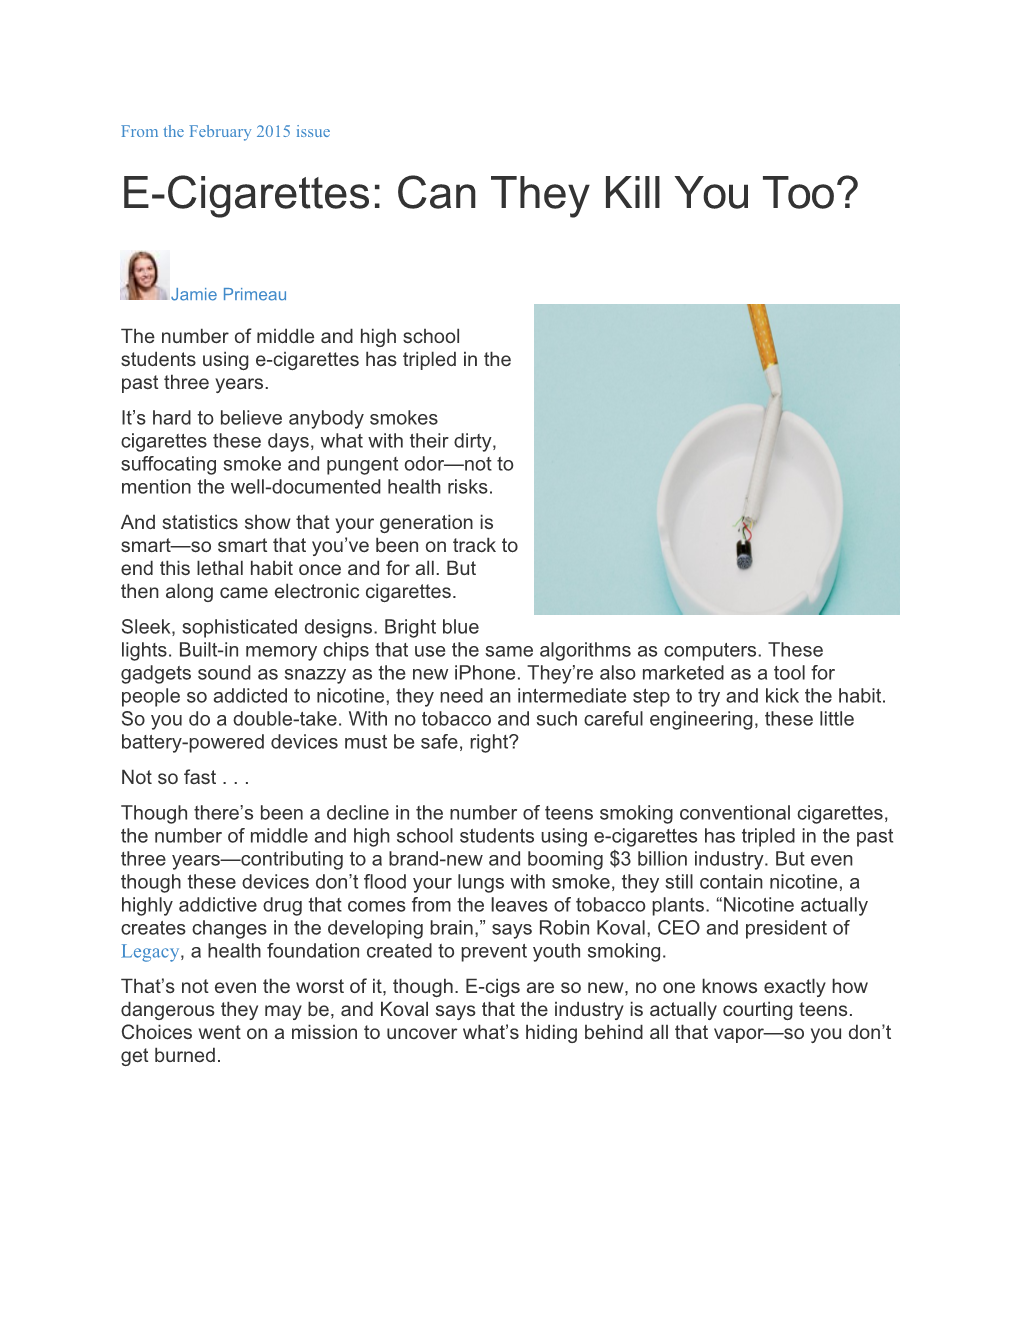 E-Cigarettes: Can They Kill You Too?